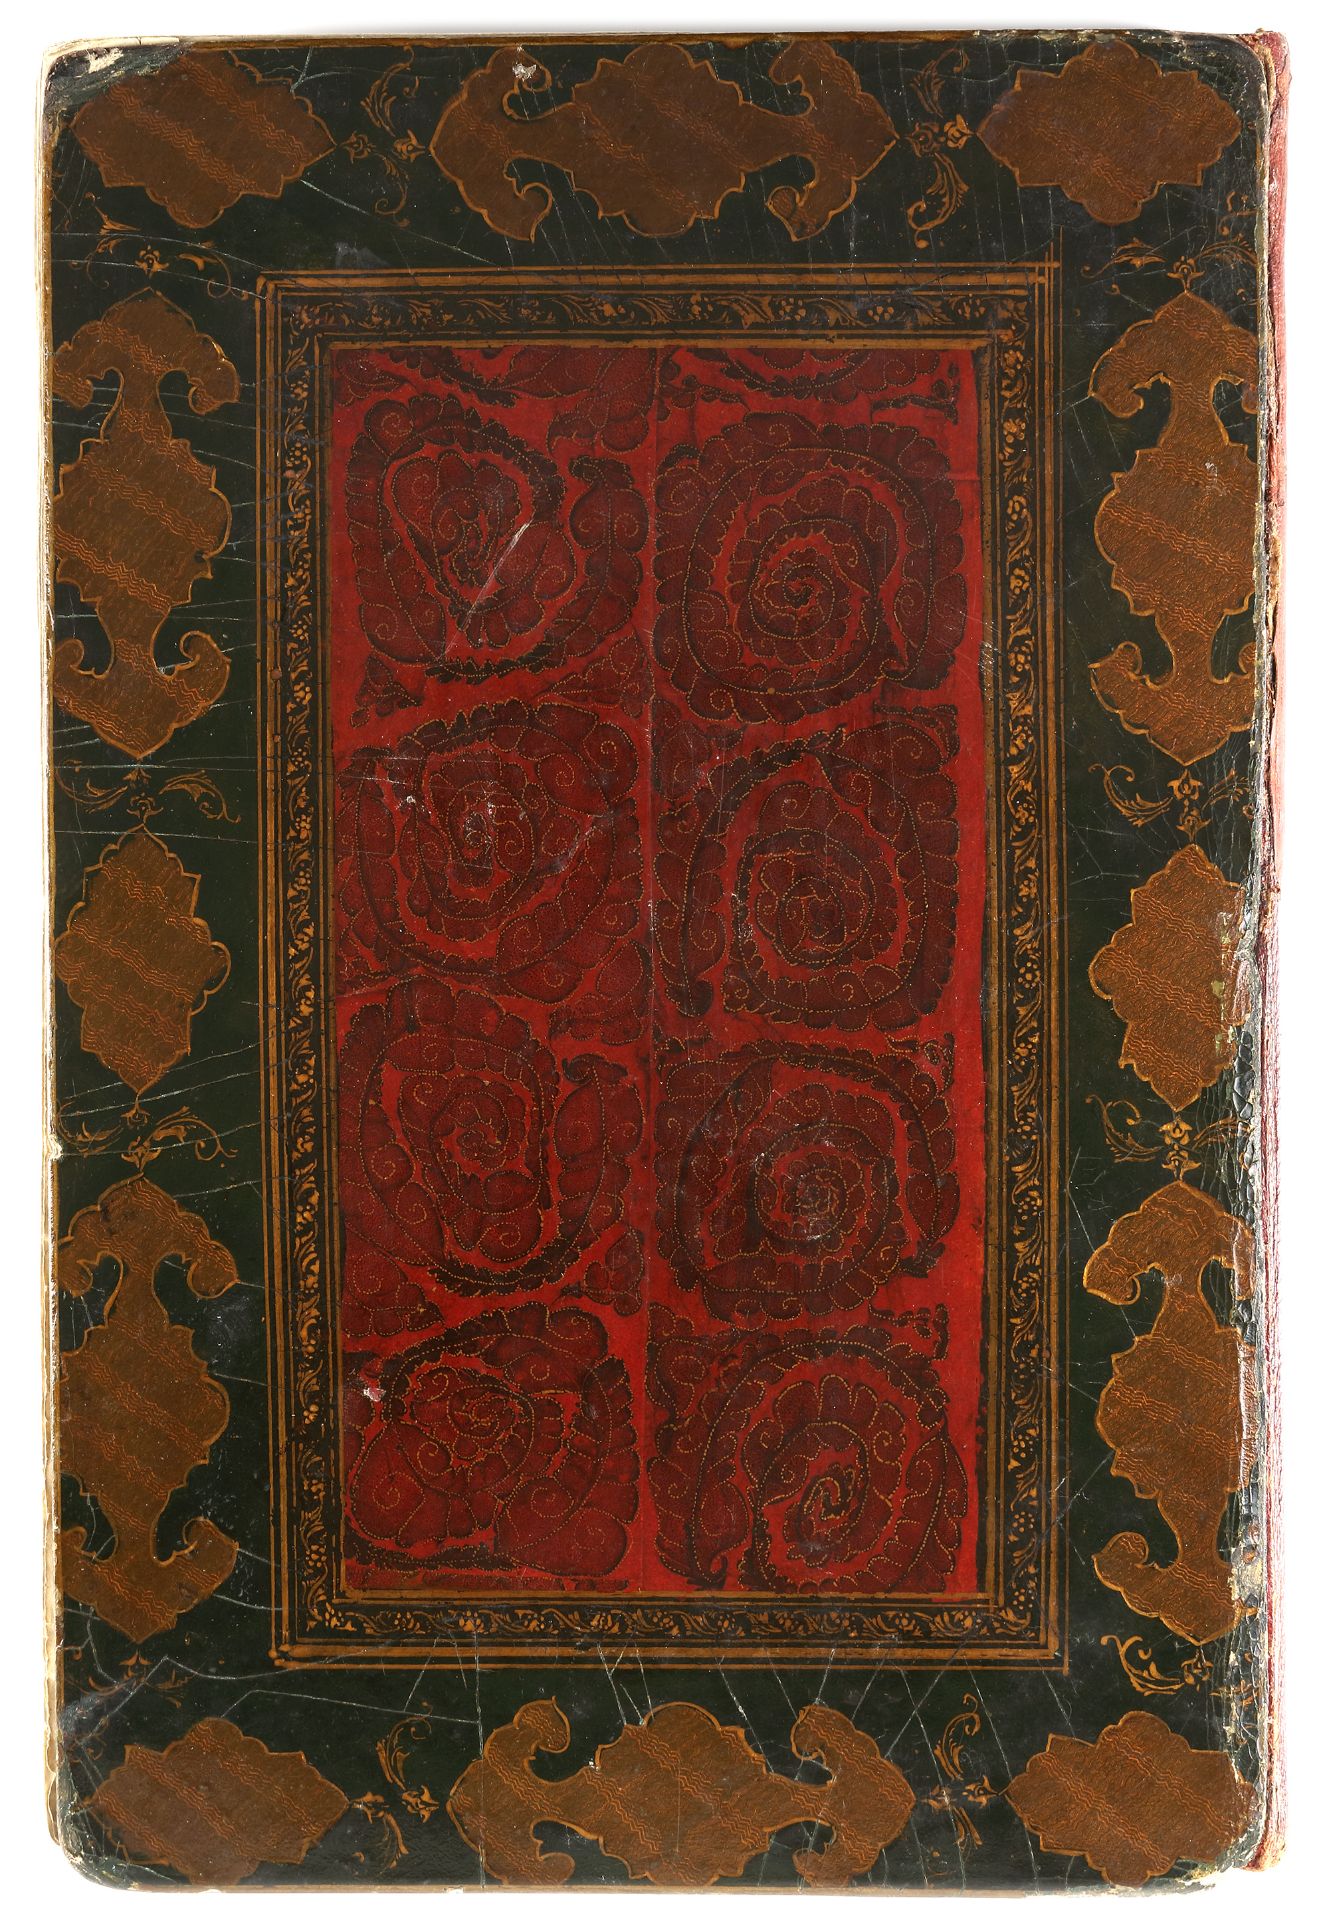 AN ILLUMINATED QAJAR QURAN WRITTEN FOR ABDULLAH KHAN AMIR NIZAM QARAGOZLU, PERSIA, 1319 AH/1901 AD - Image 2 of 4